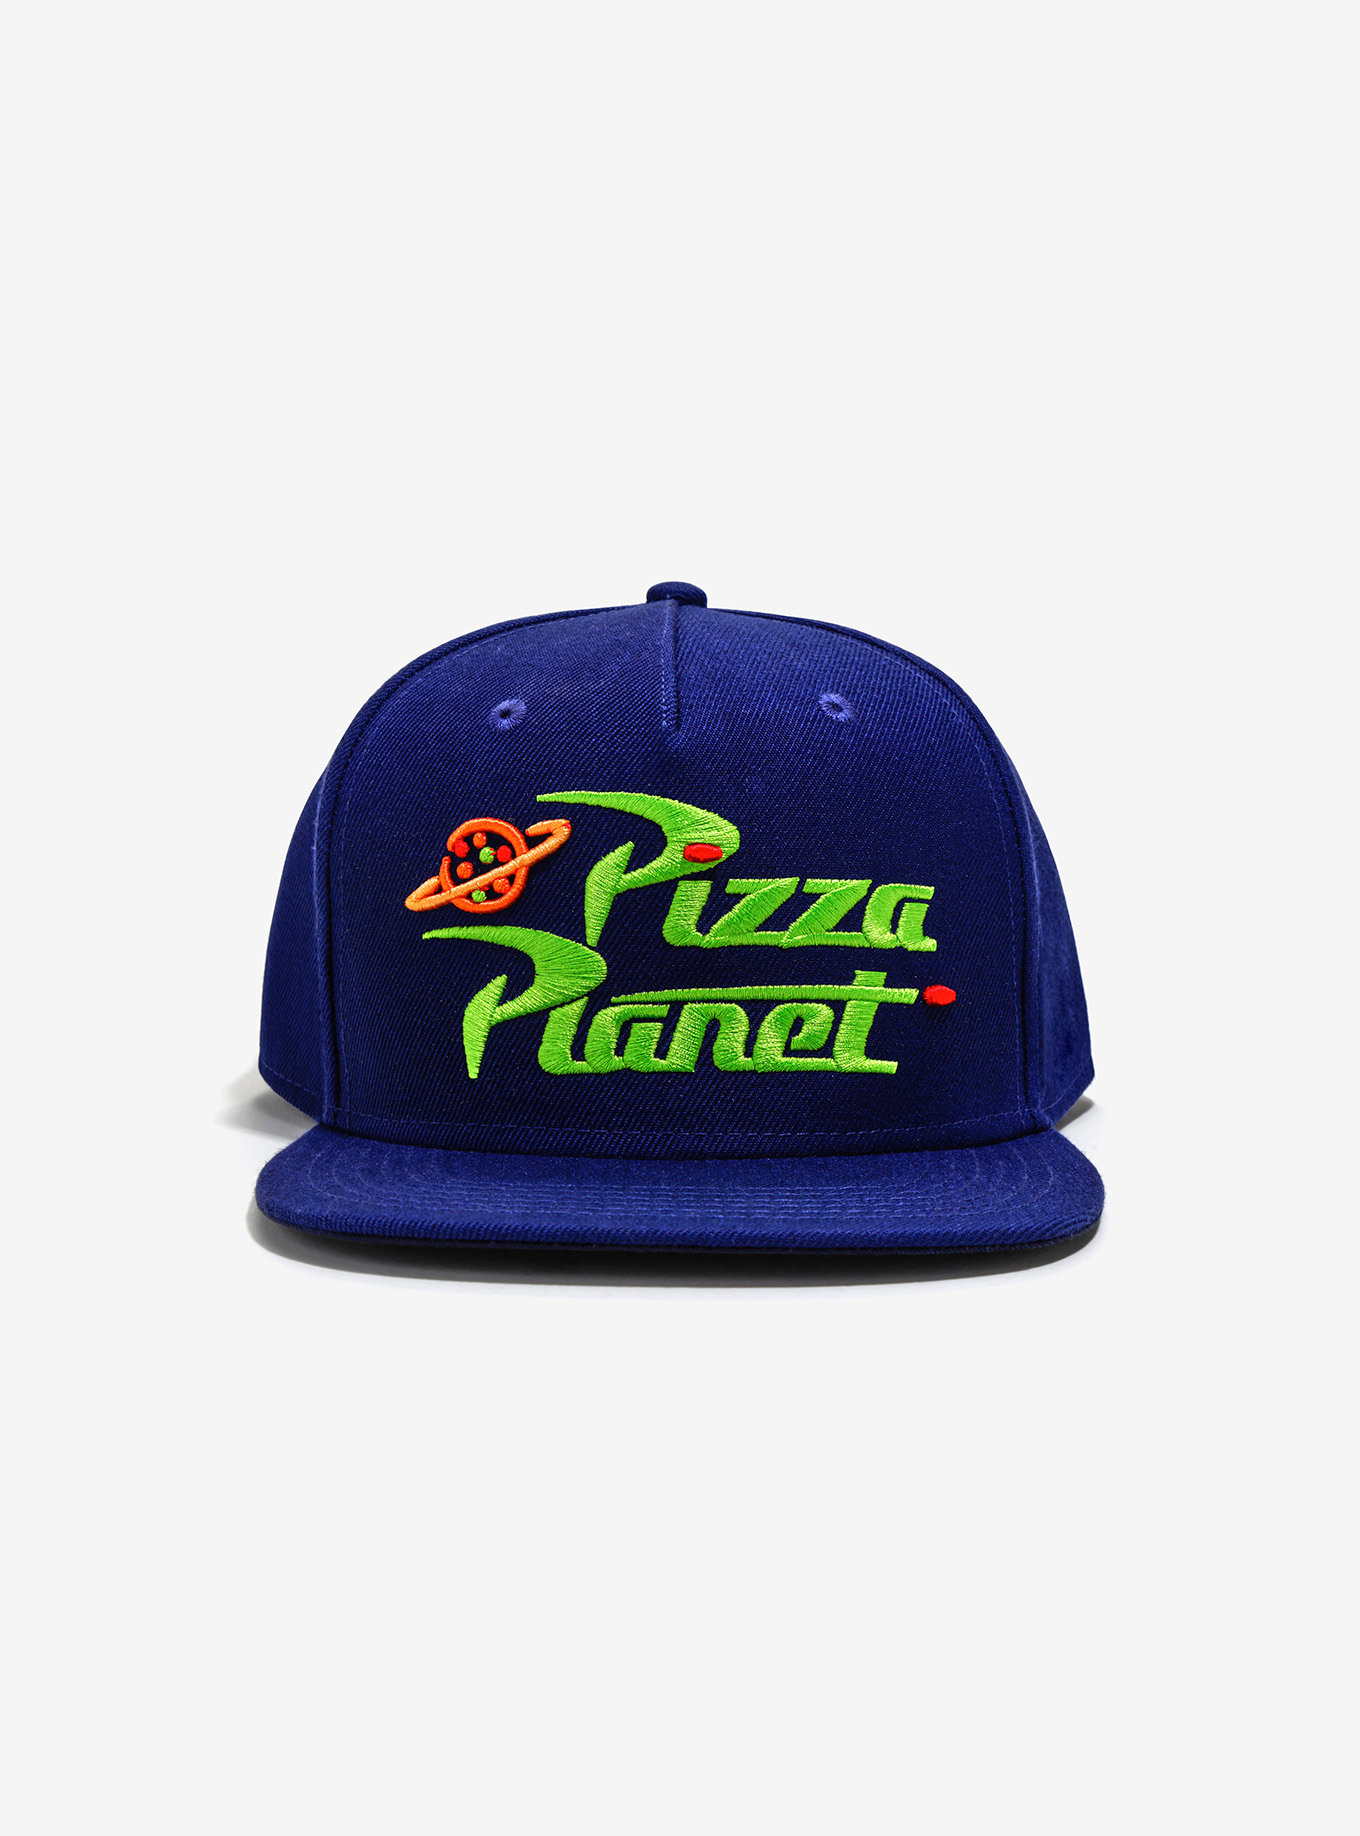 pizza planet hat.jpg